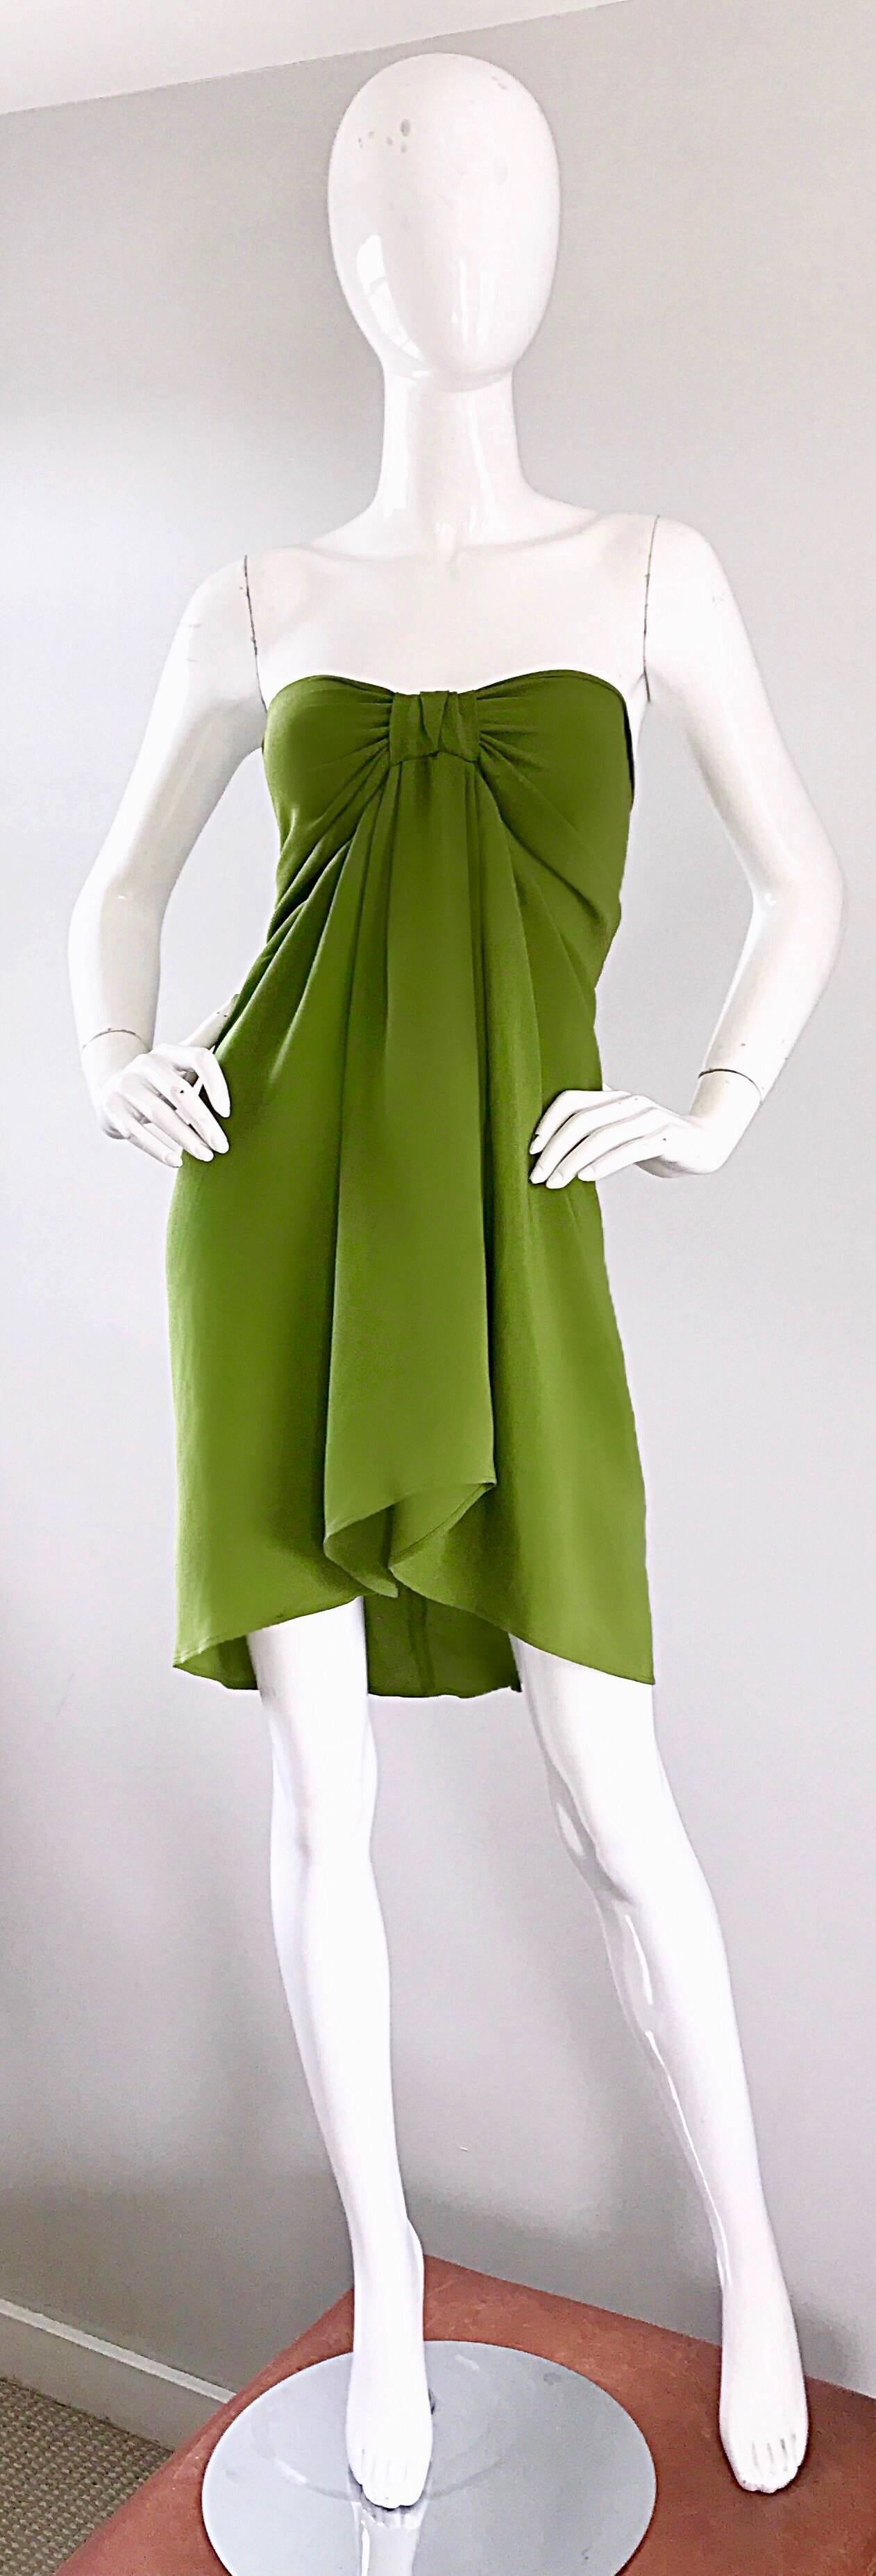 Christian Lacroix 1990s Chartreuse Green Strapless 90s Silk Empire Waist Dress 4